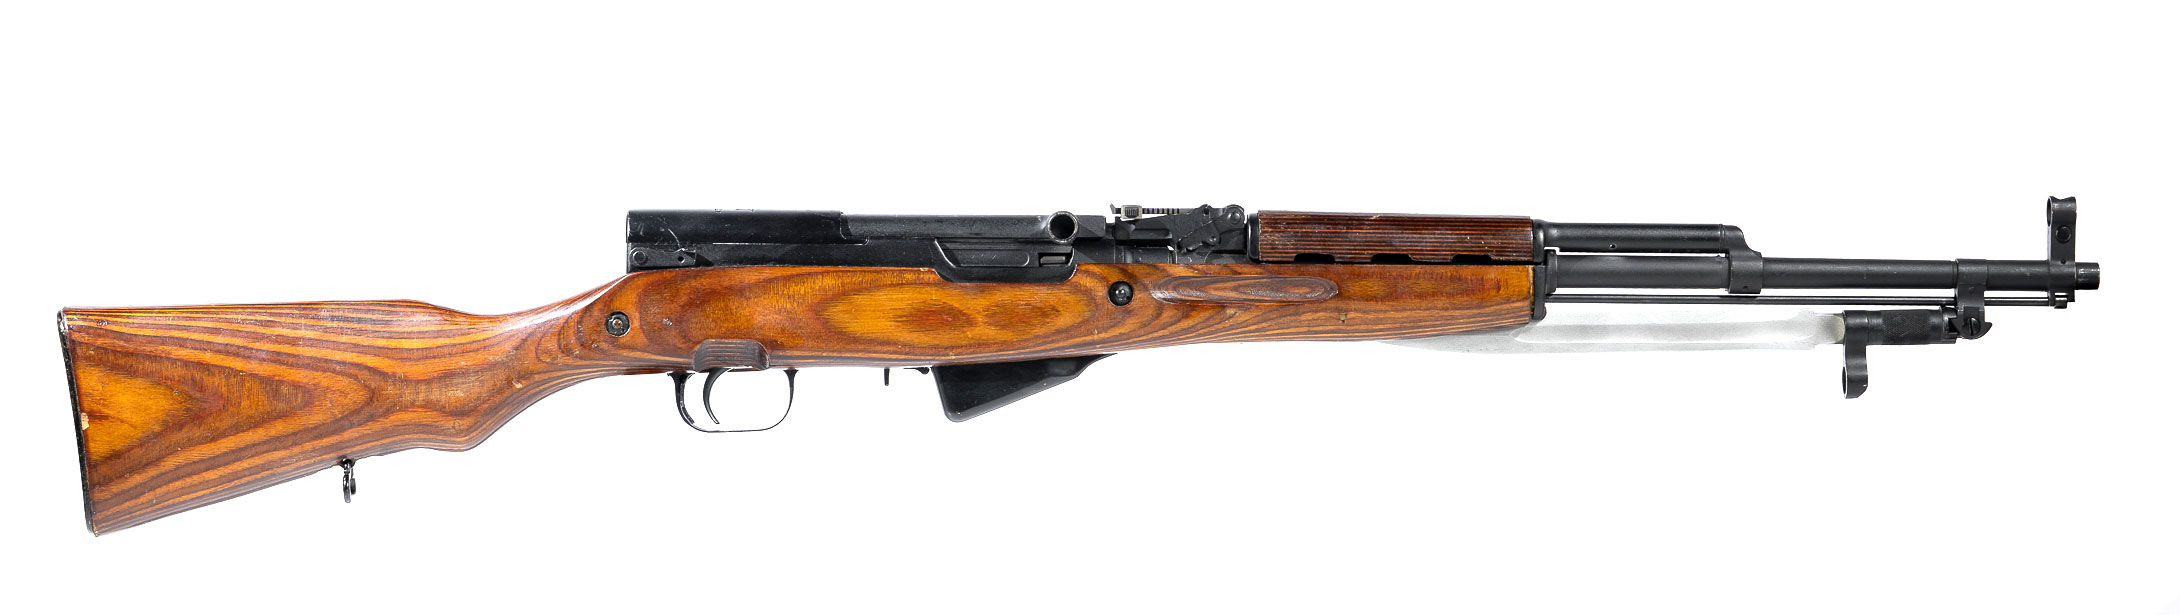 SKS 7.62x39mm Rifle (code R017)-image